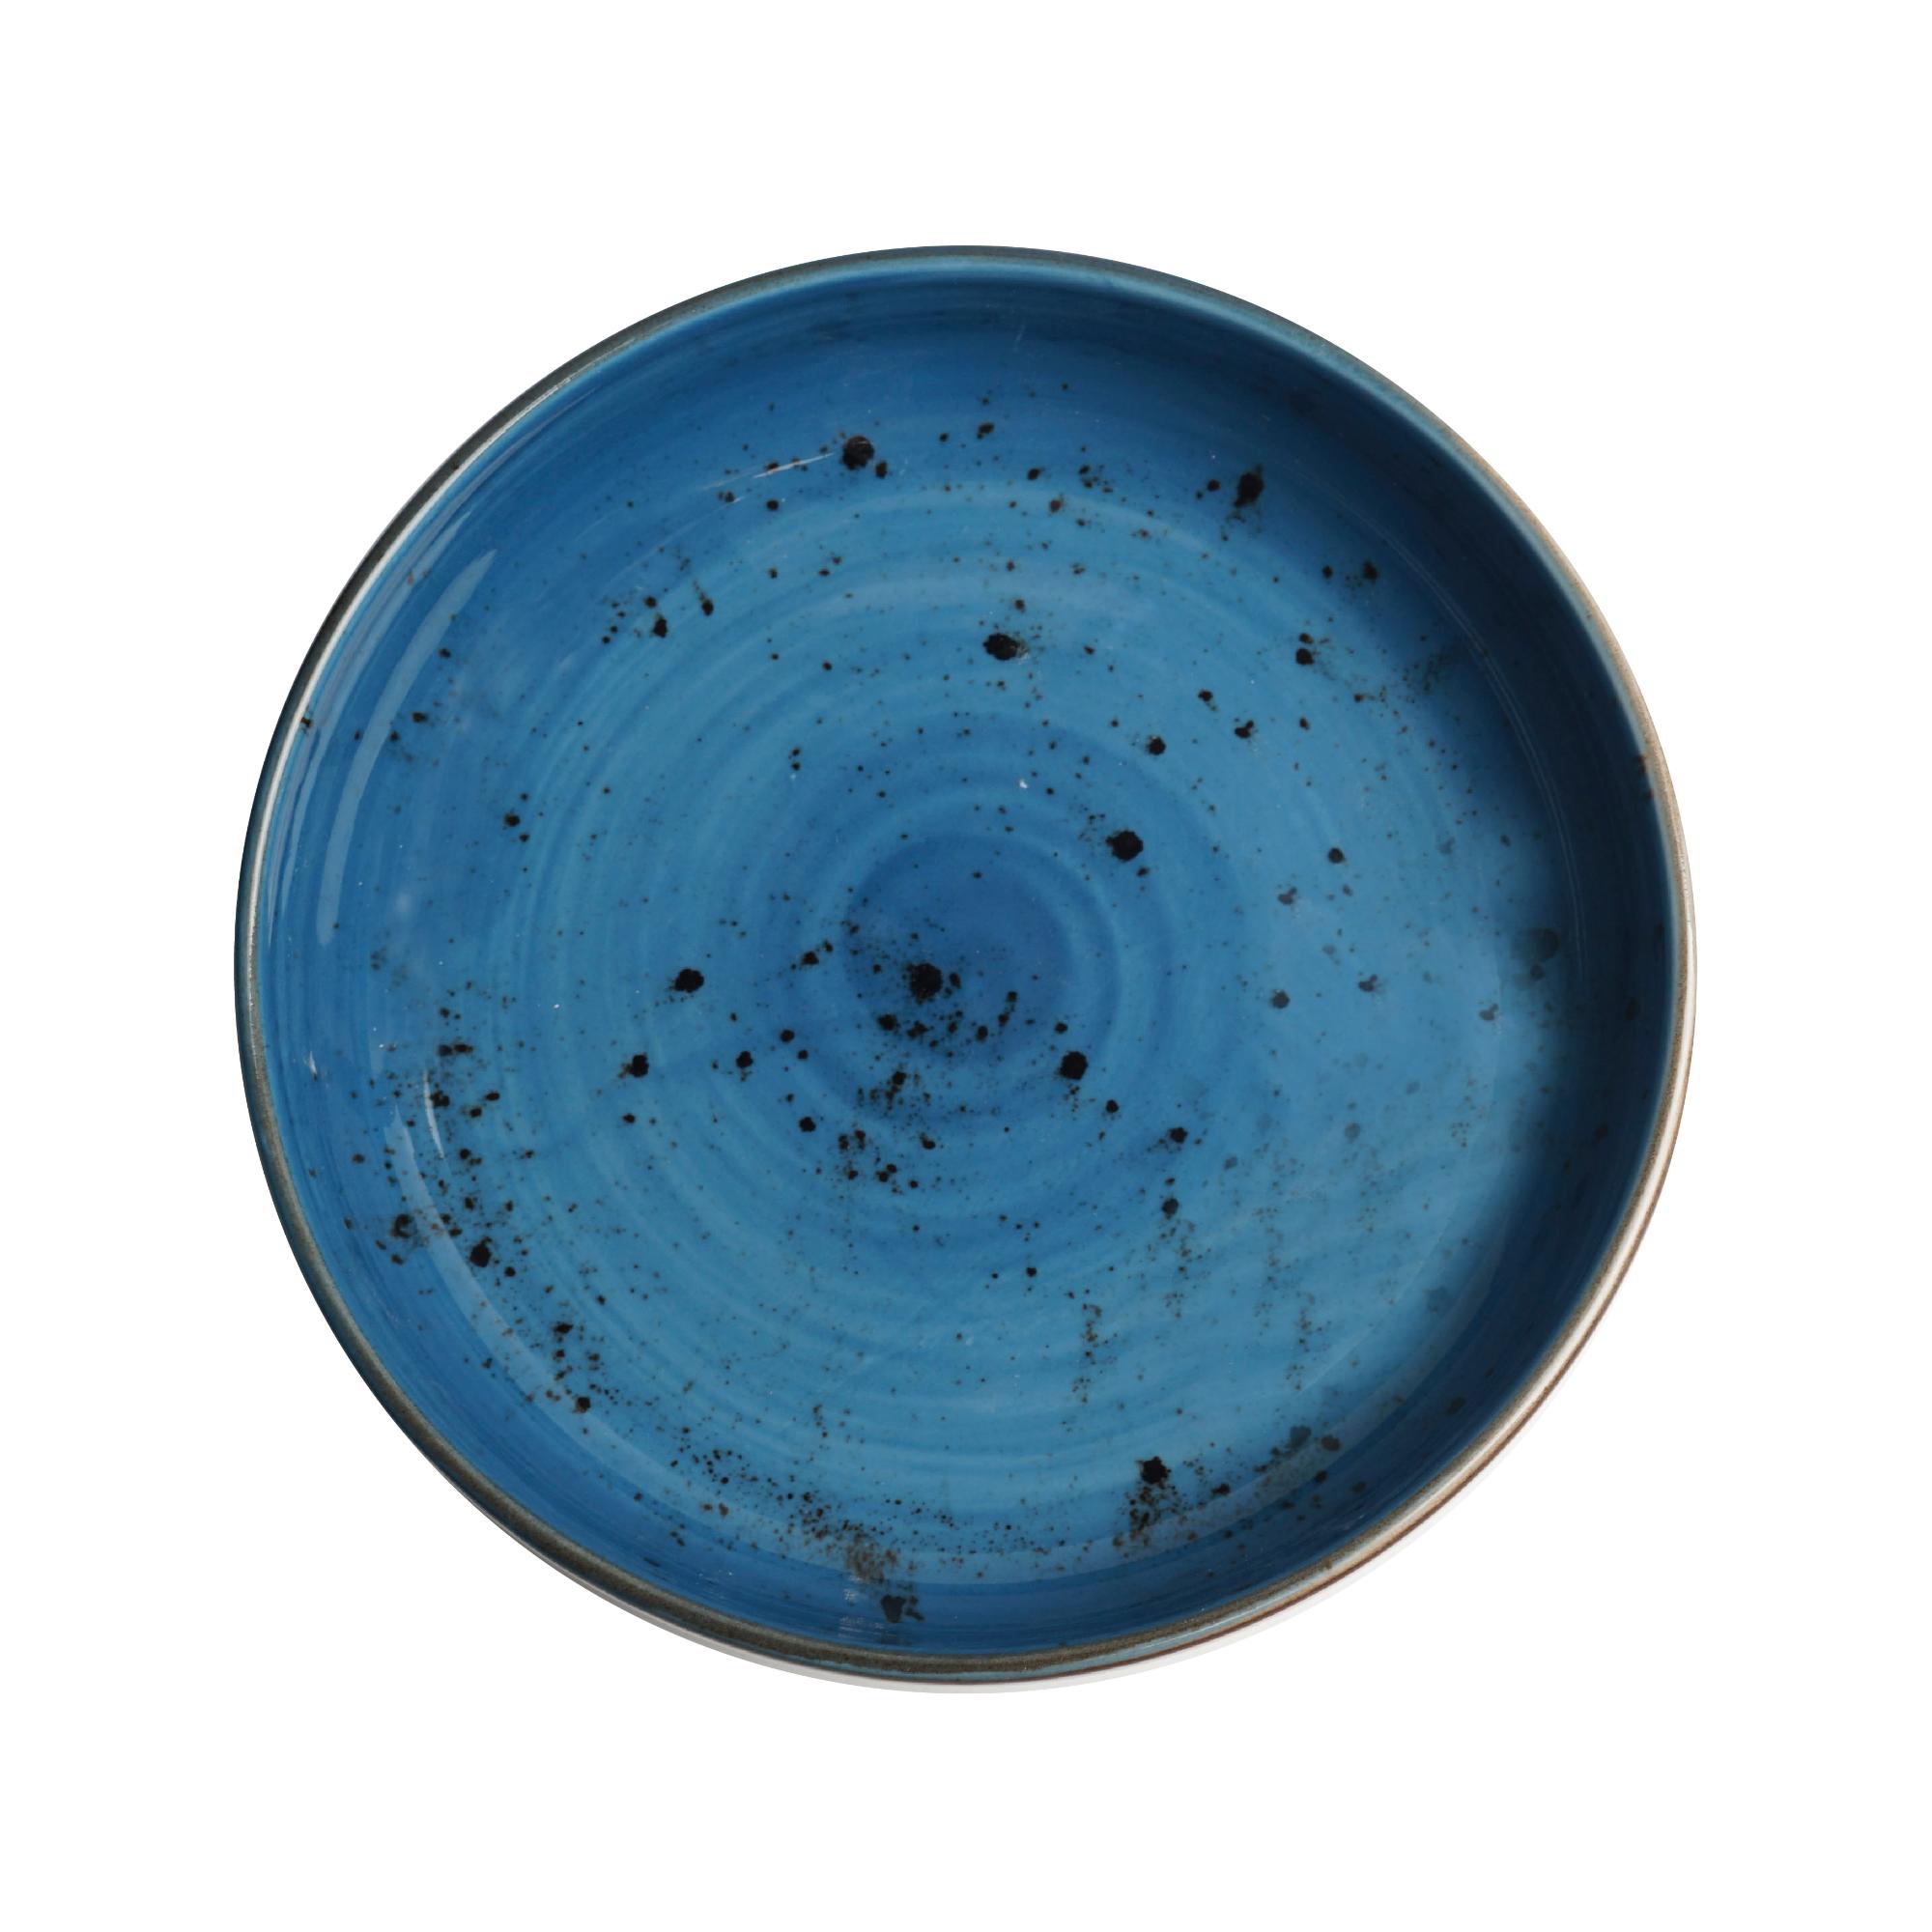 Iris shallow bowl, 200mm